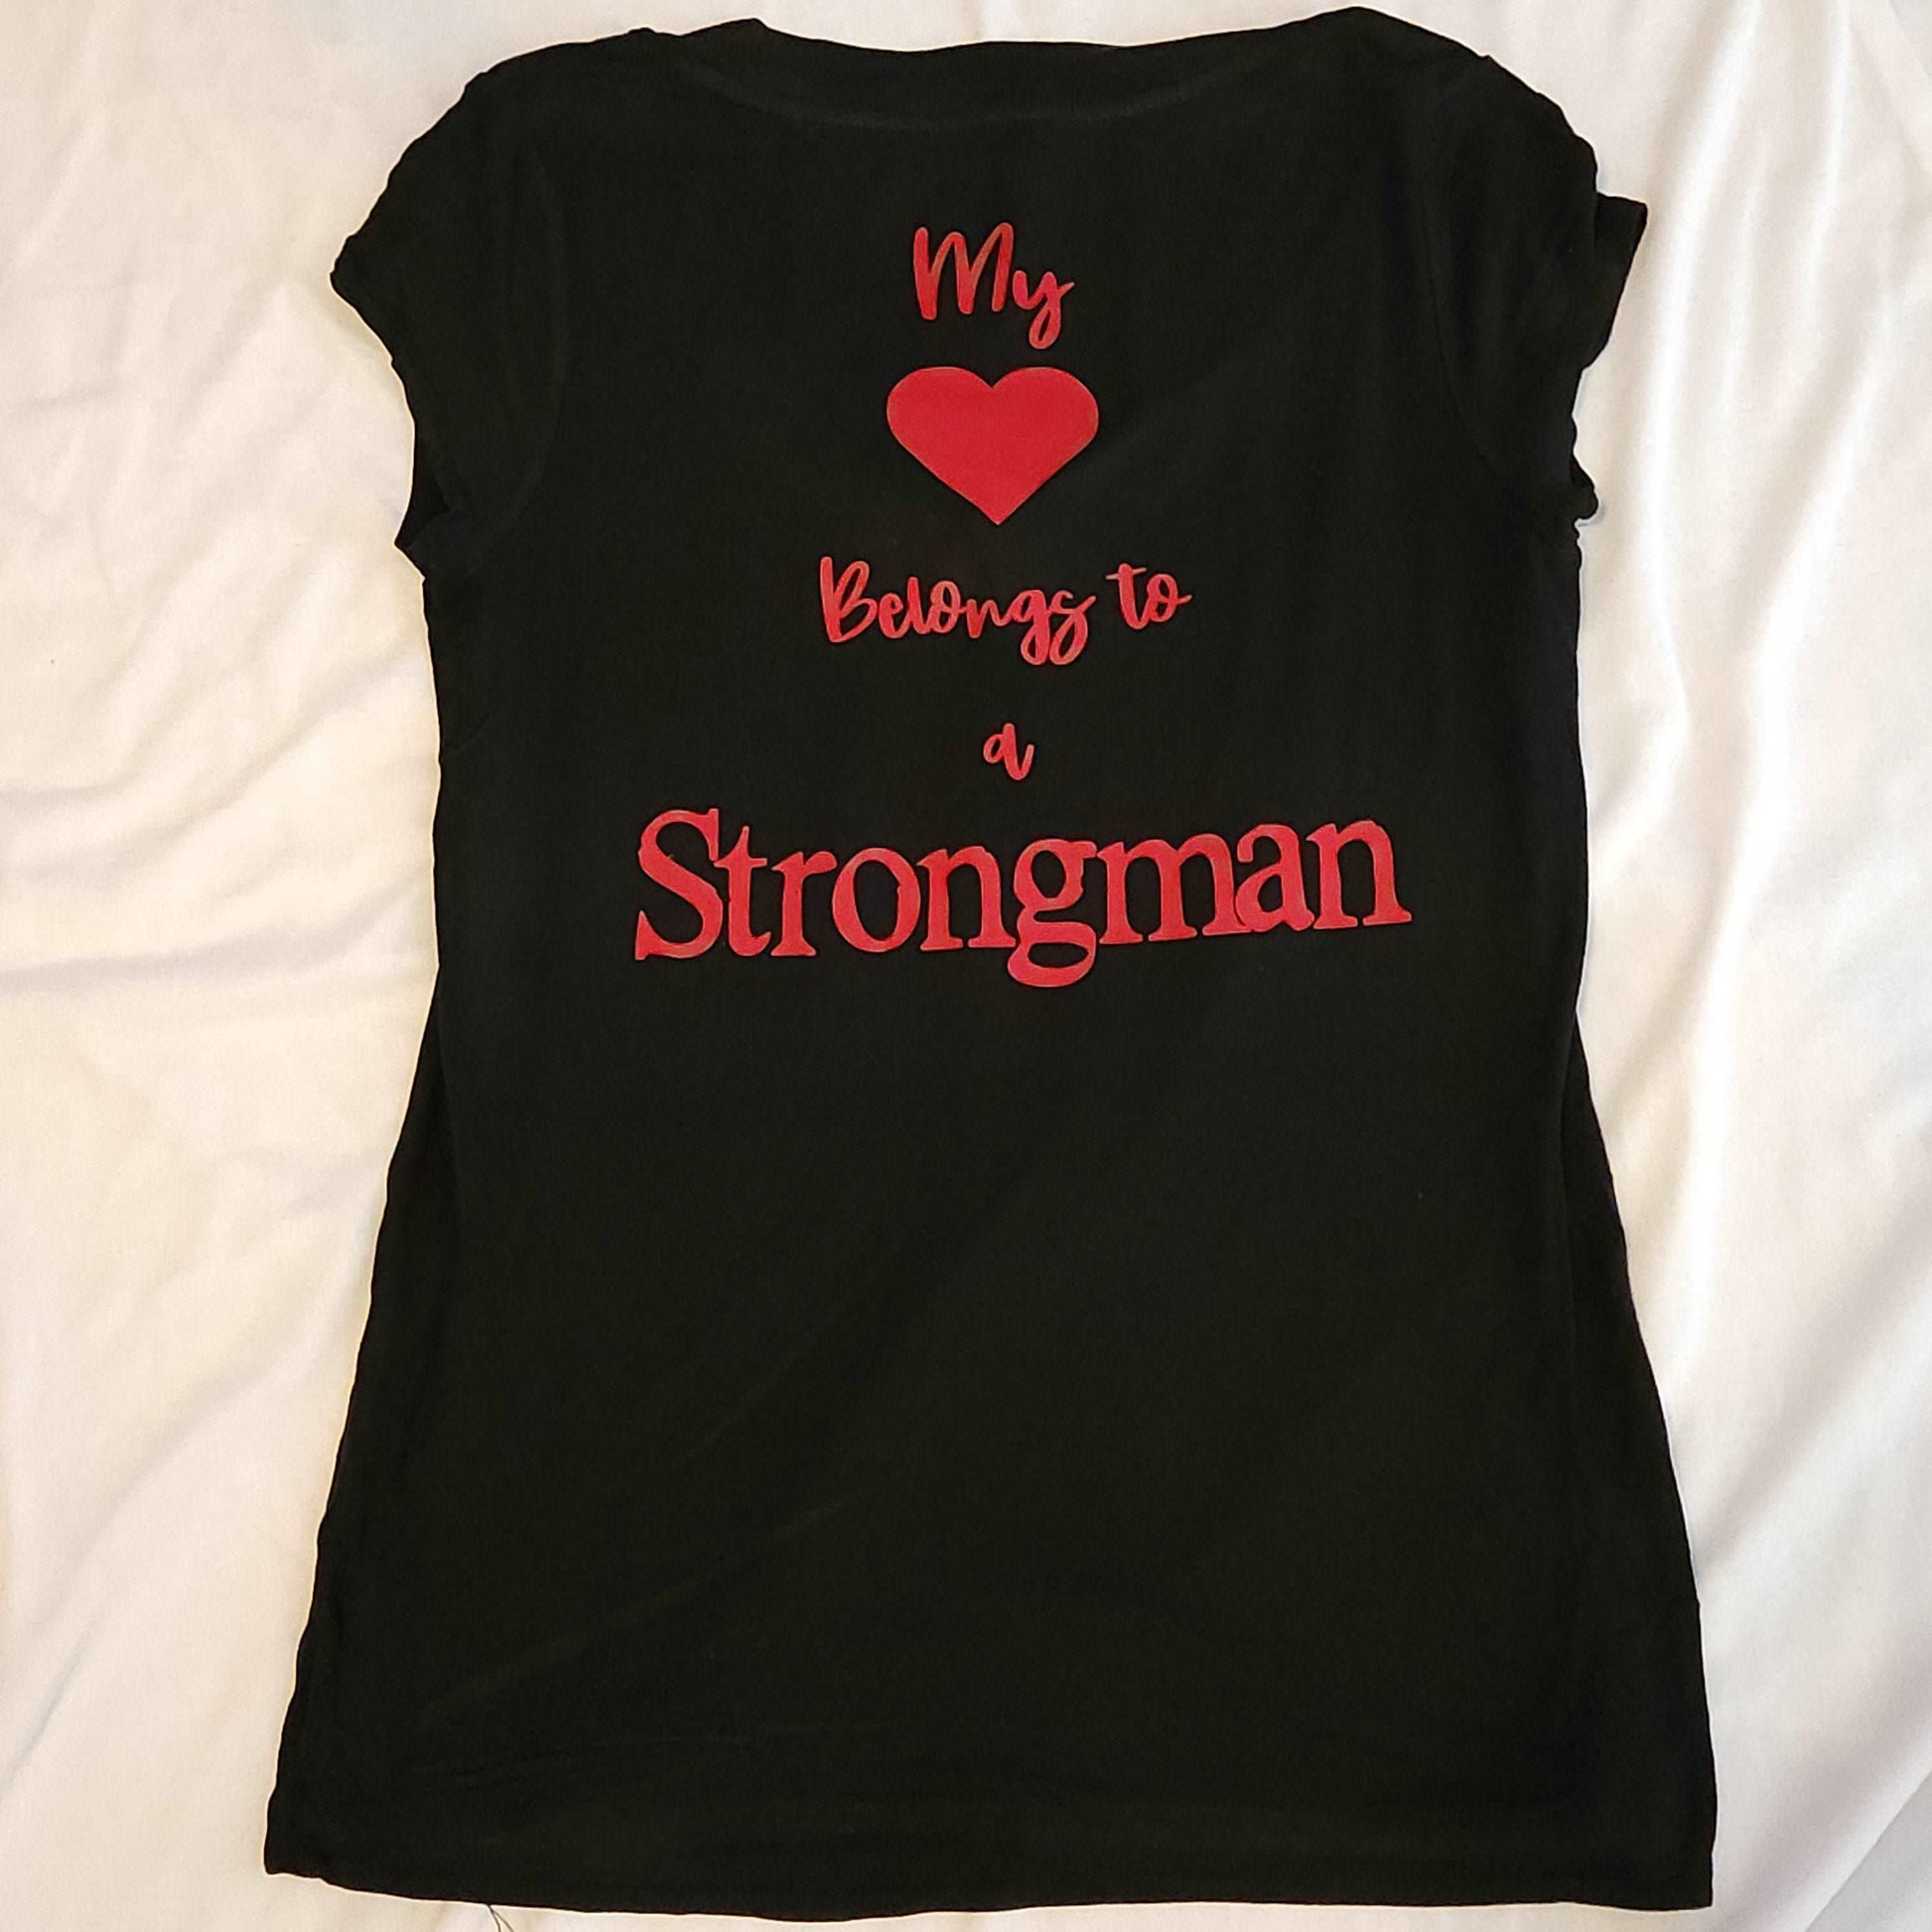 My heart belongs to a strongman black tee shirt